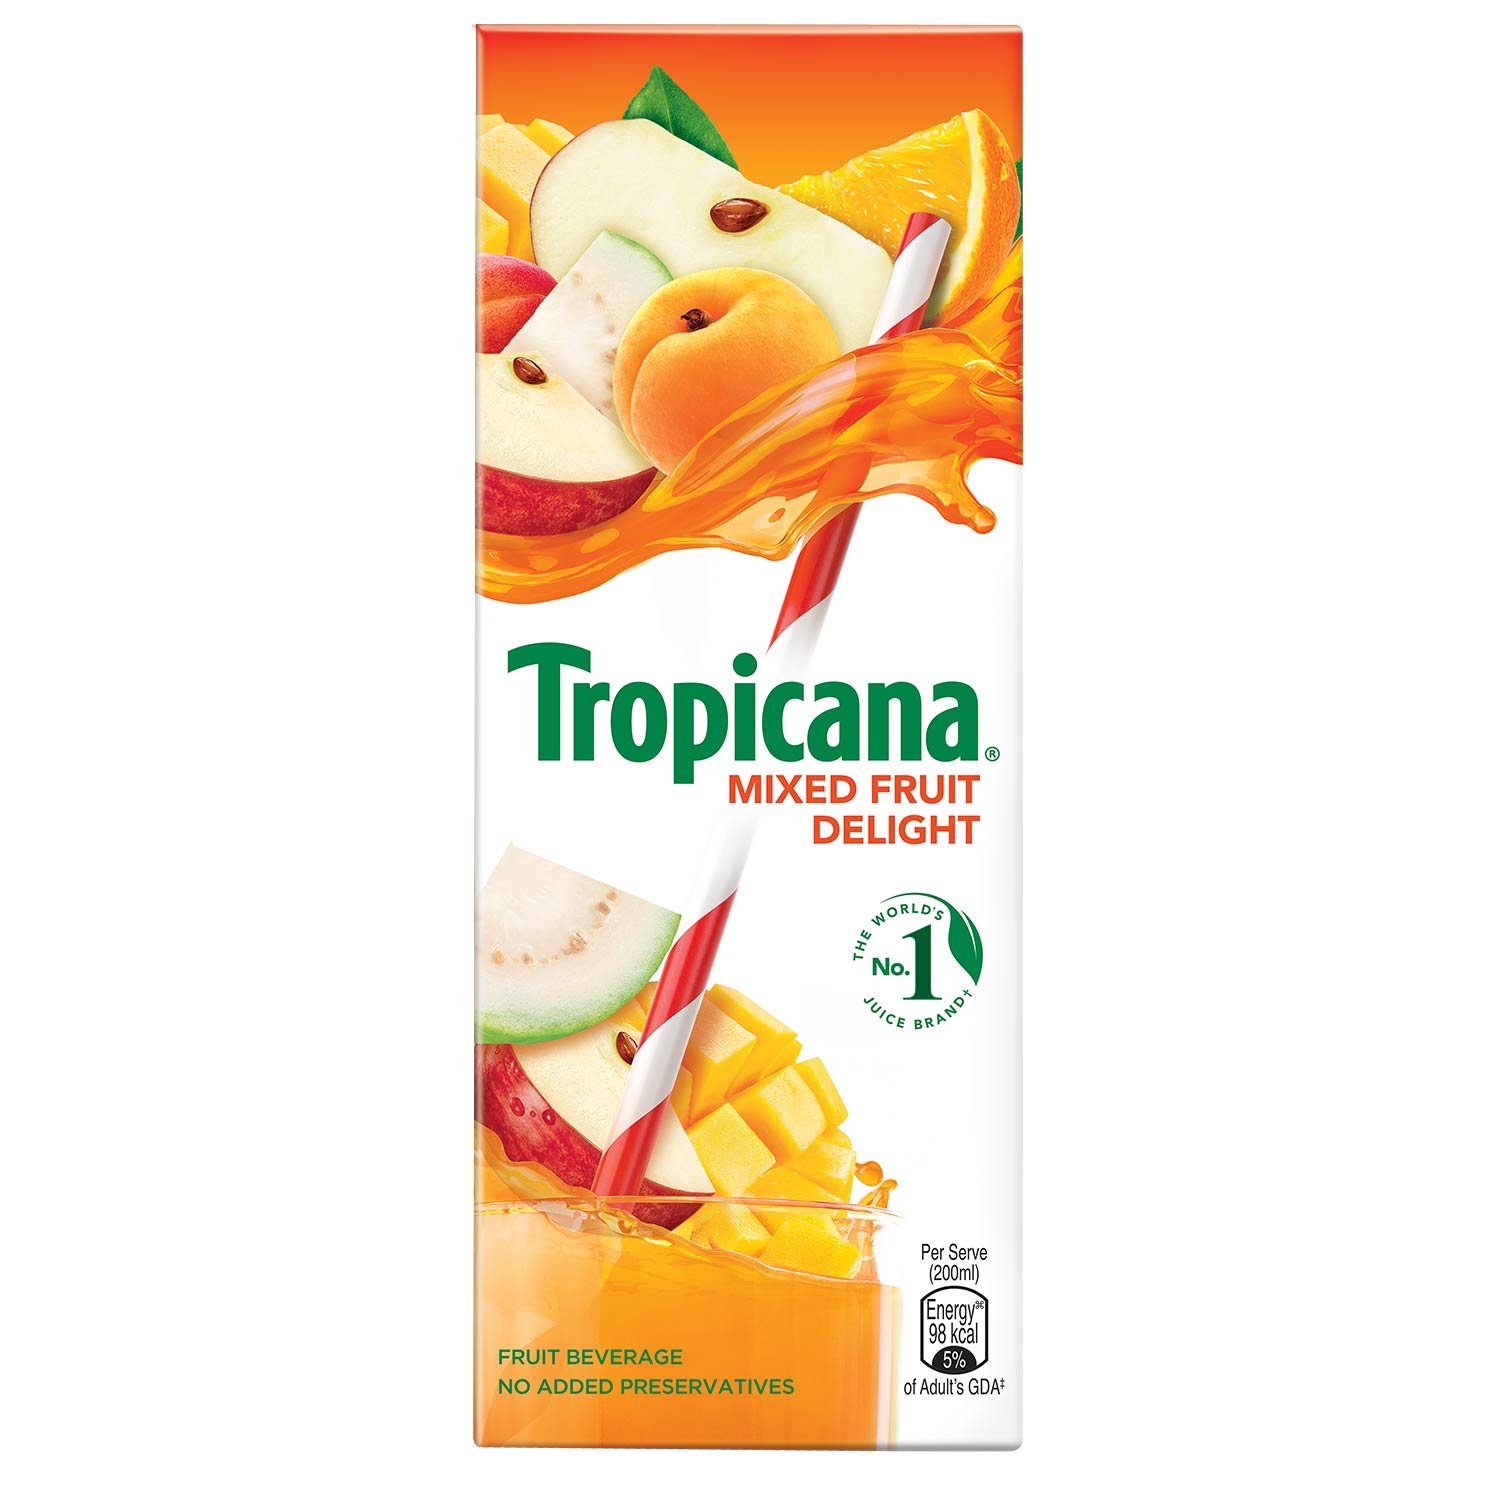 Tropicana Mixed Fruit Delight Fruit Juice Image